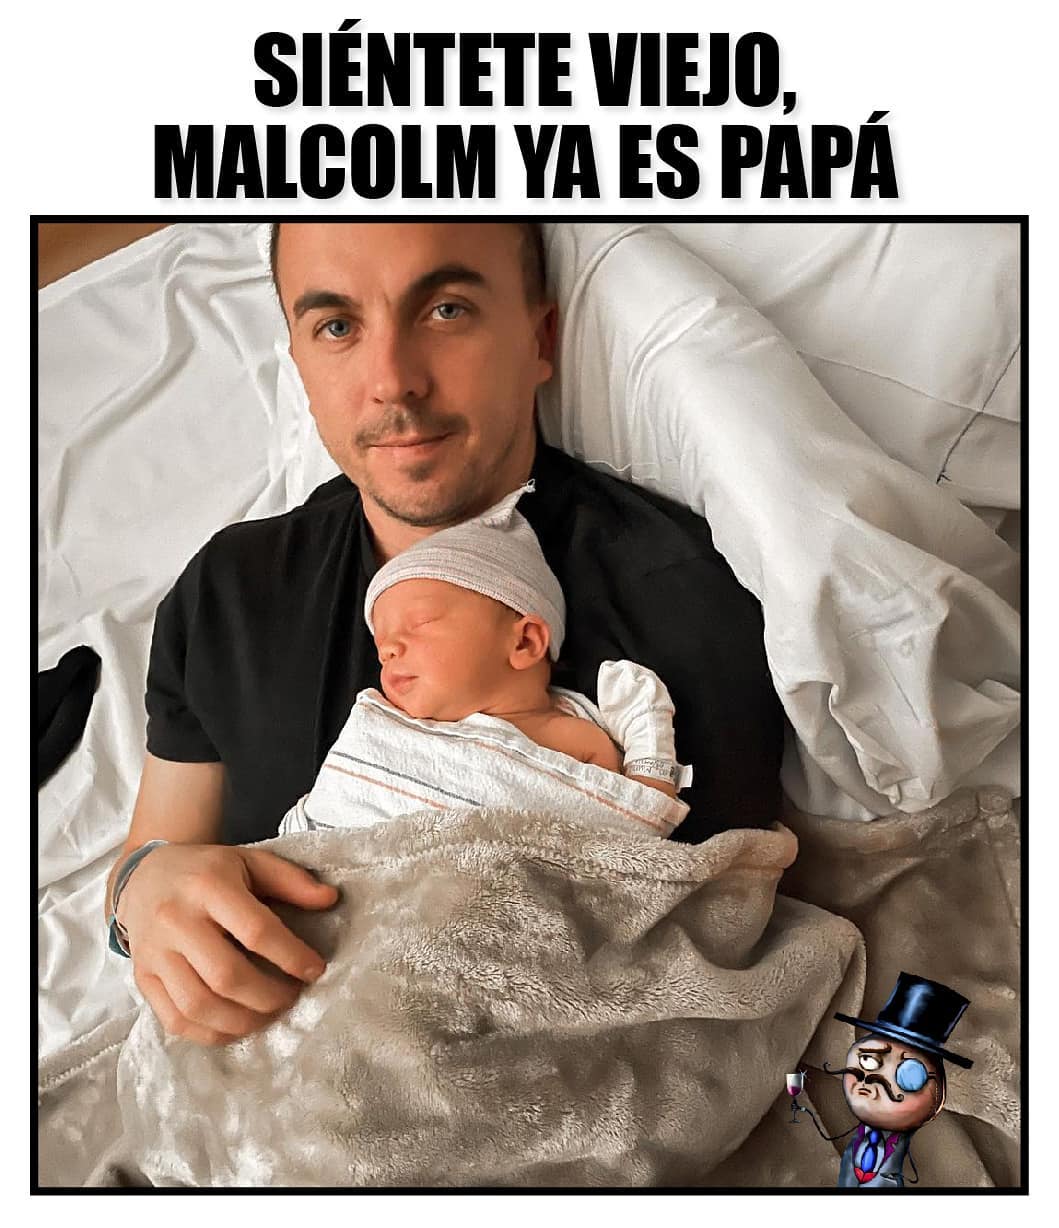 Siéntete viejo, Malcolm ya es papá.